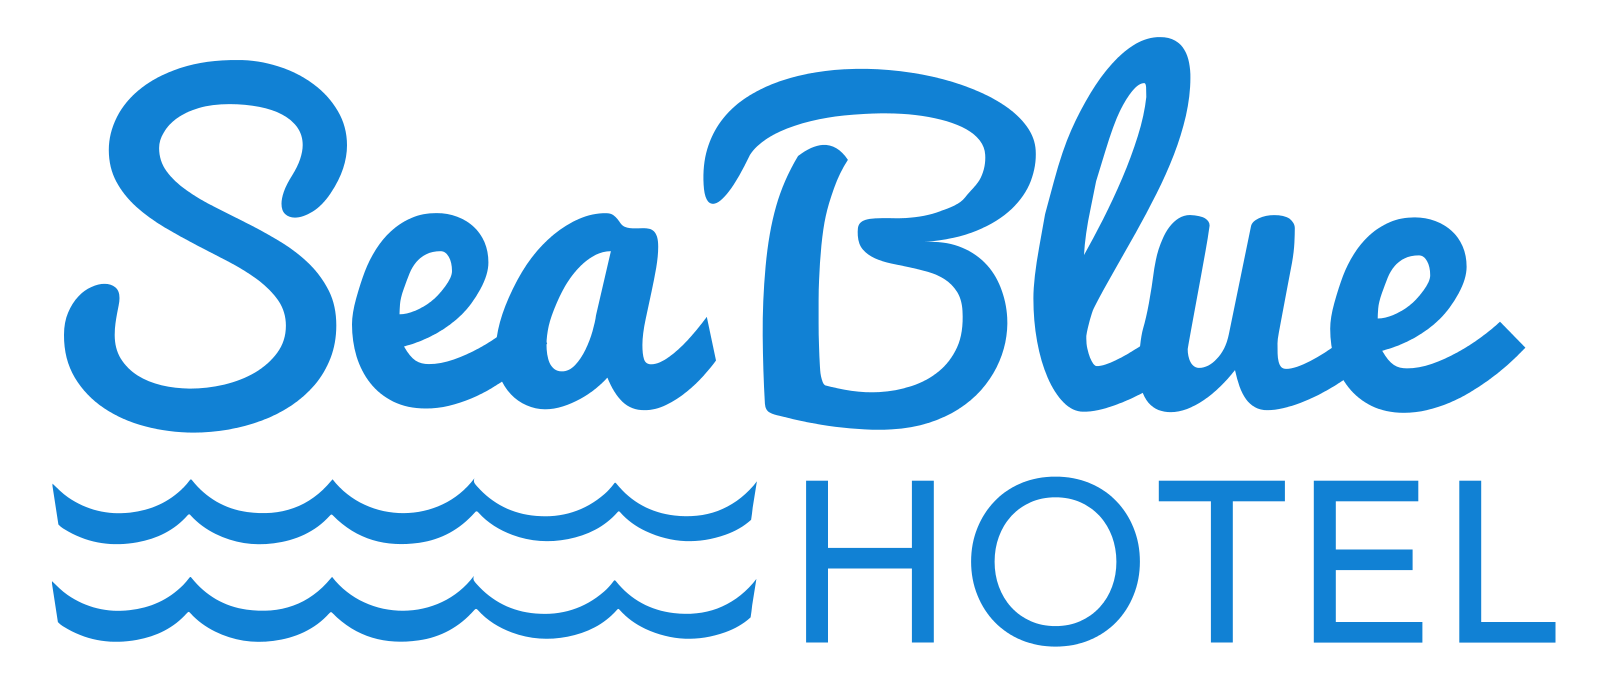 Sea Blue Hotel